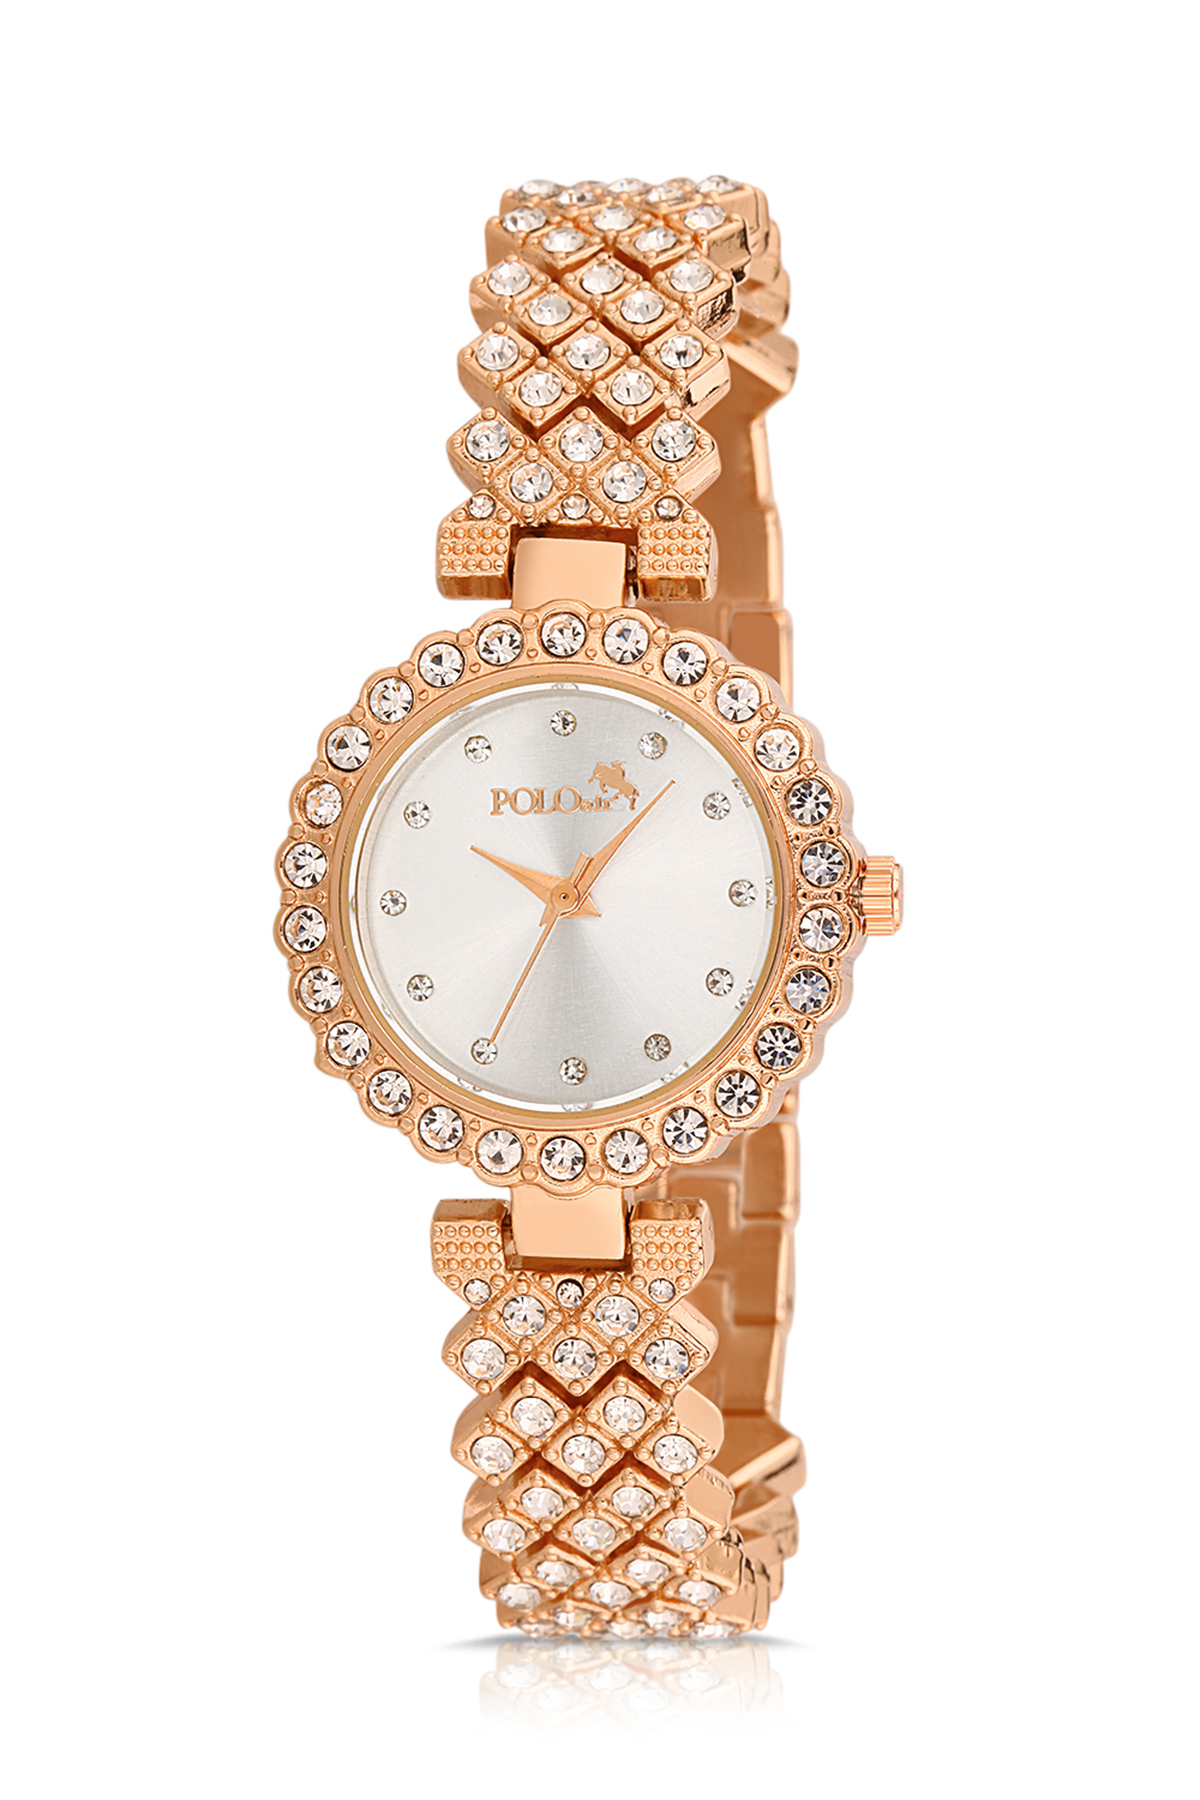 Polo Air Luxury Stone Elegant Women's Wristwatch Copper Color